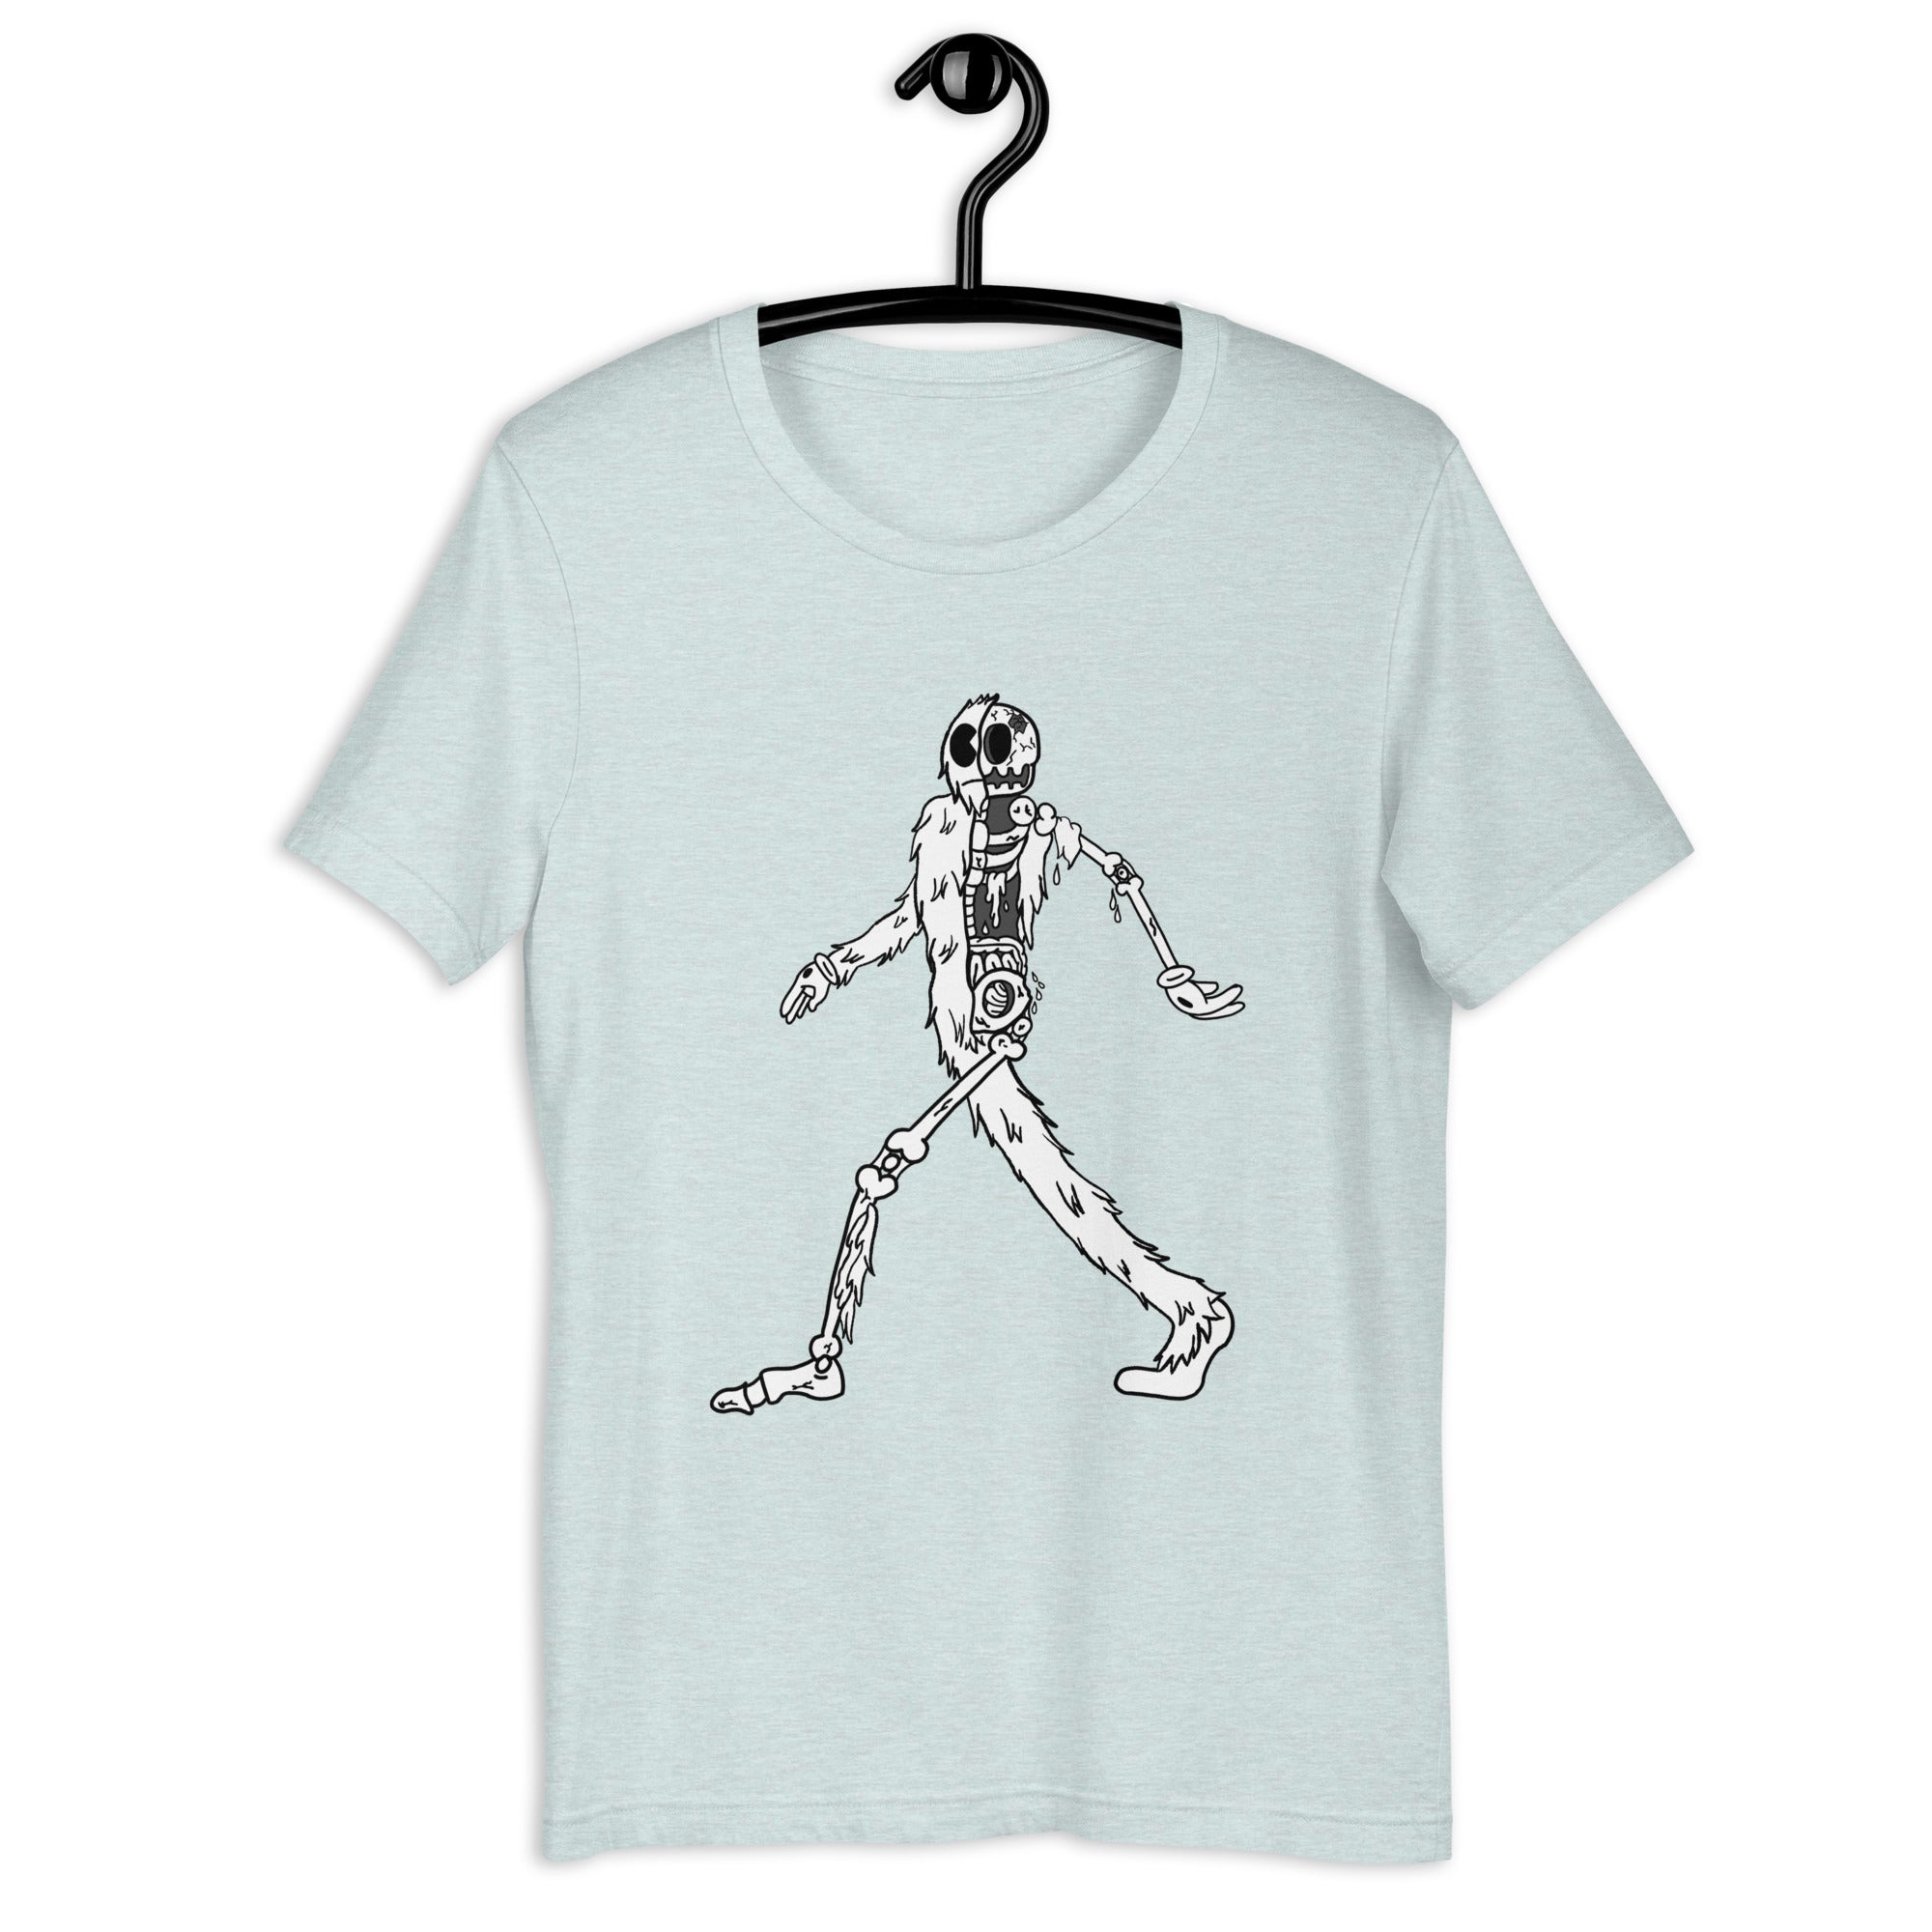 Walking Yeti - Unisex t-shirt